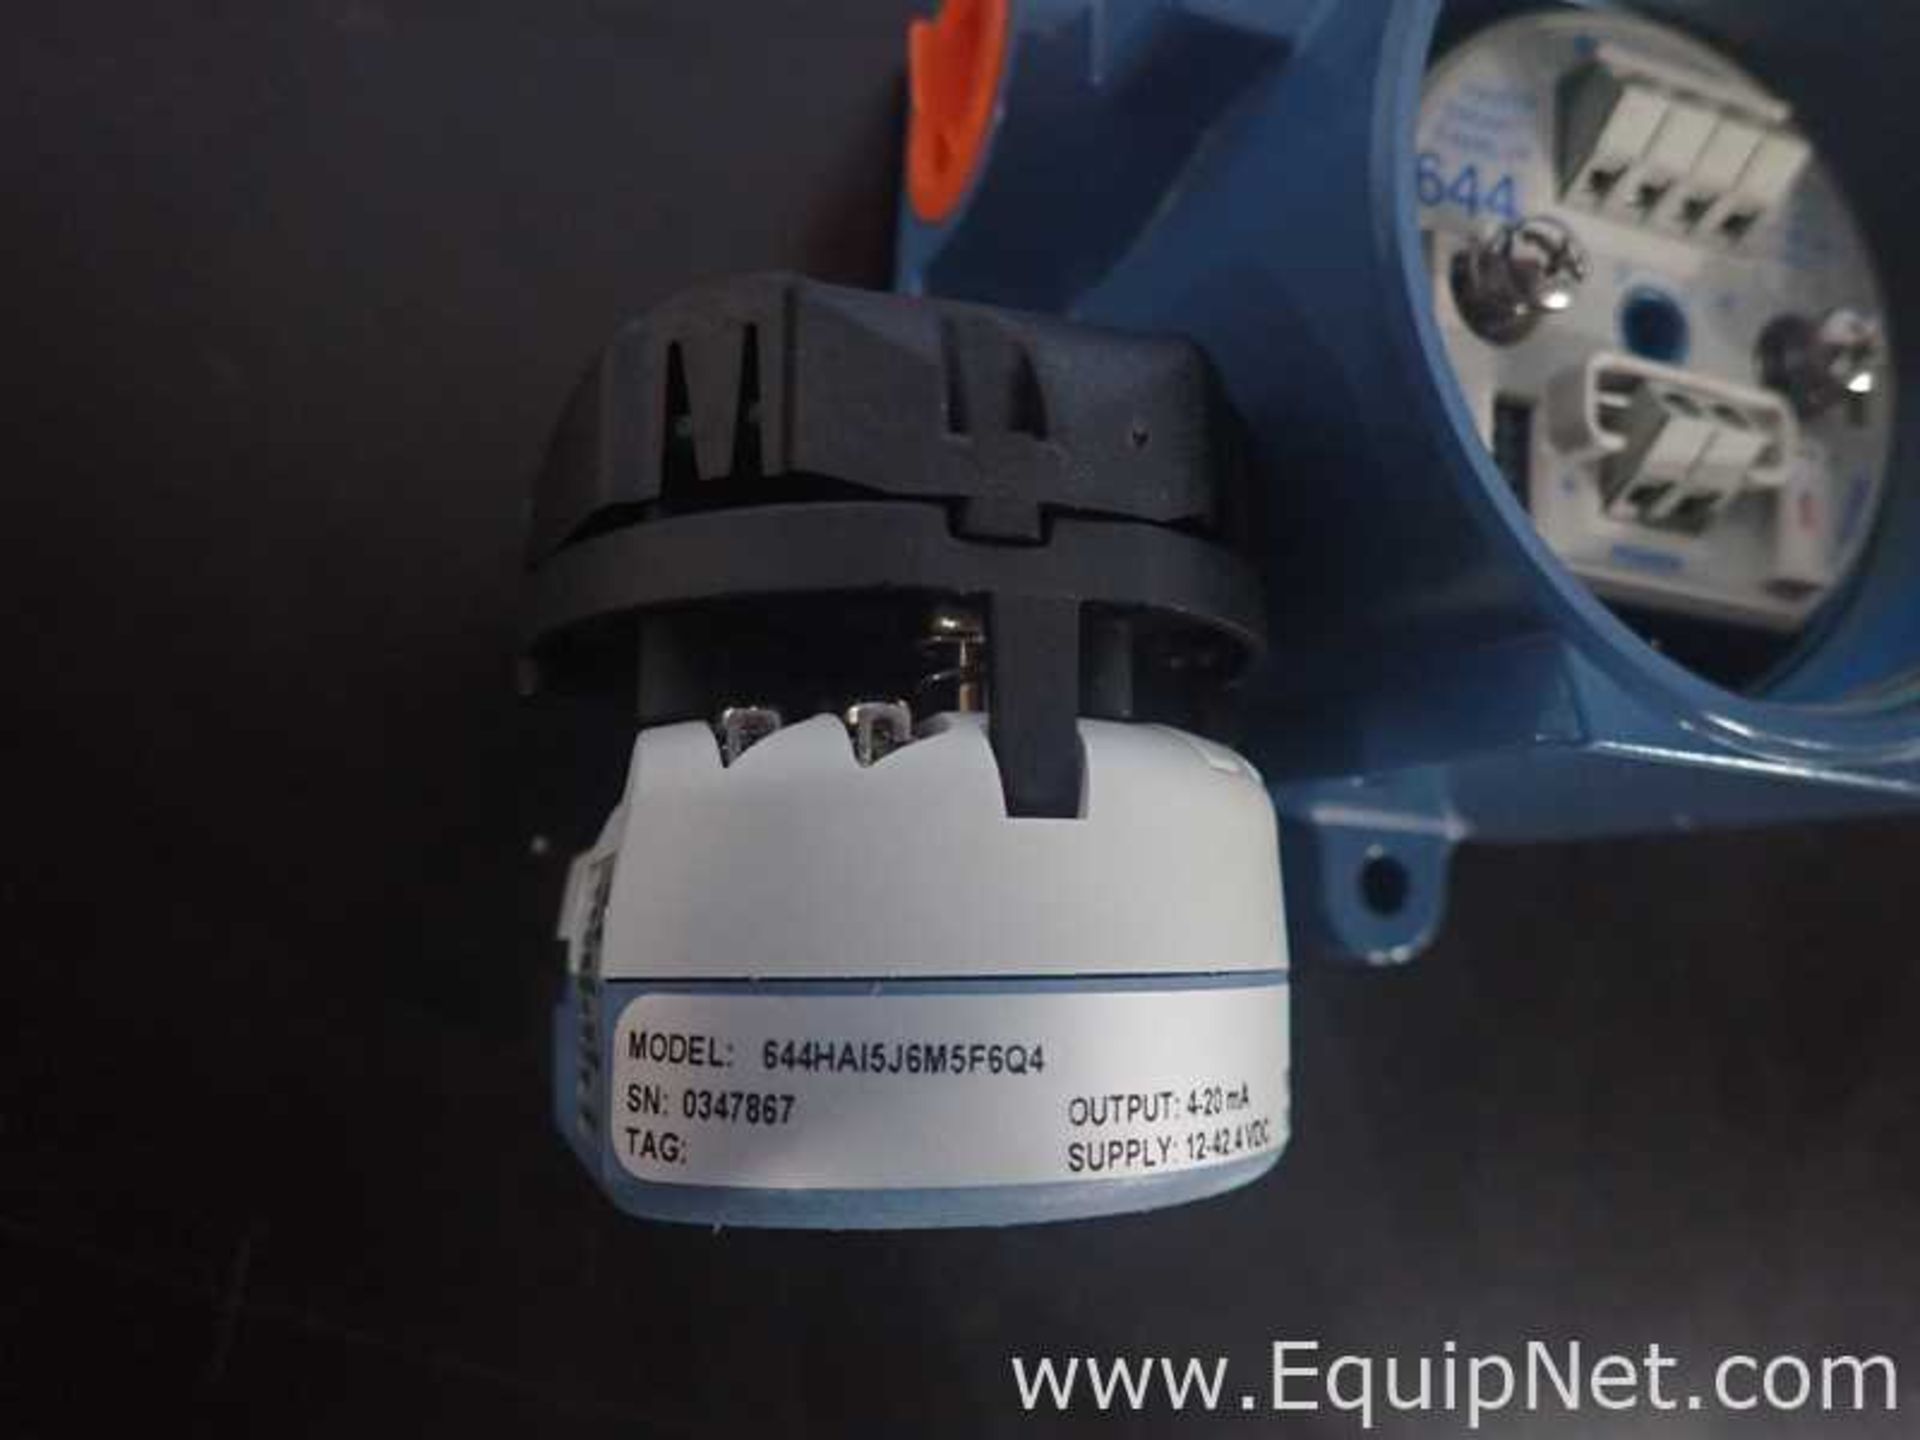 Rosemount 644 Smart Temperature Transmitter - Image 9 of 9